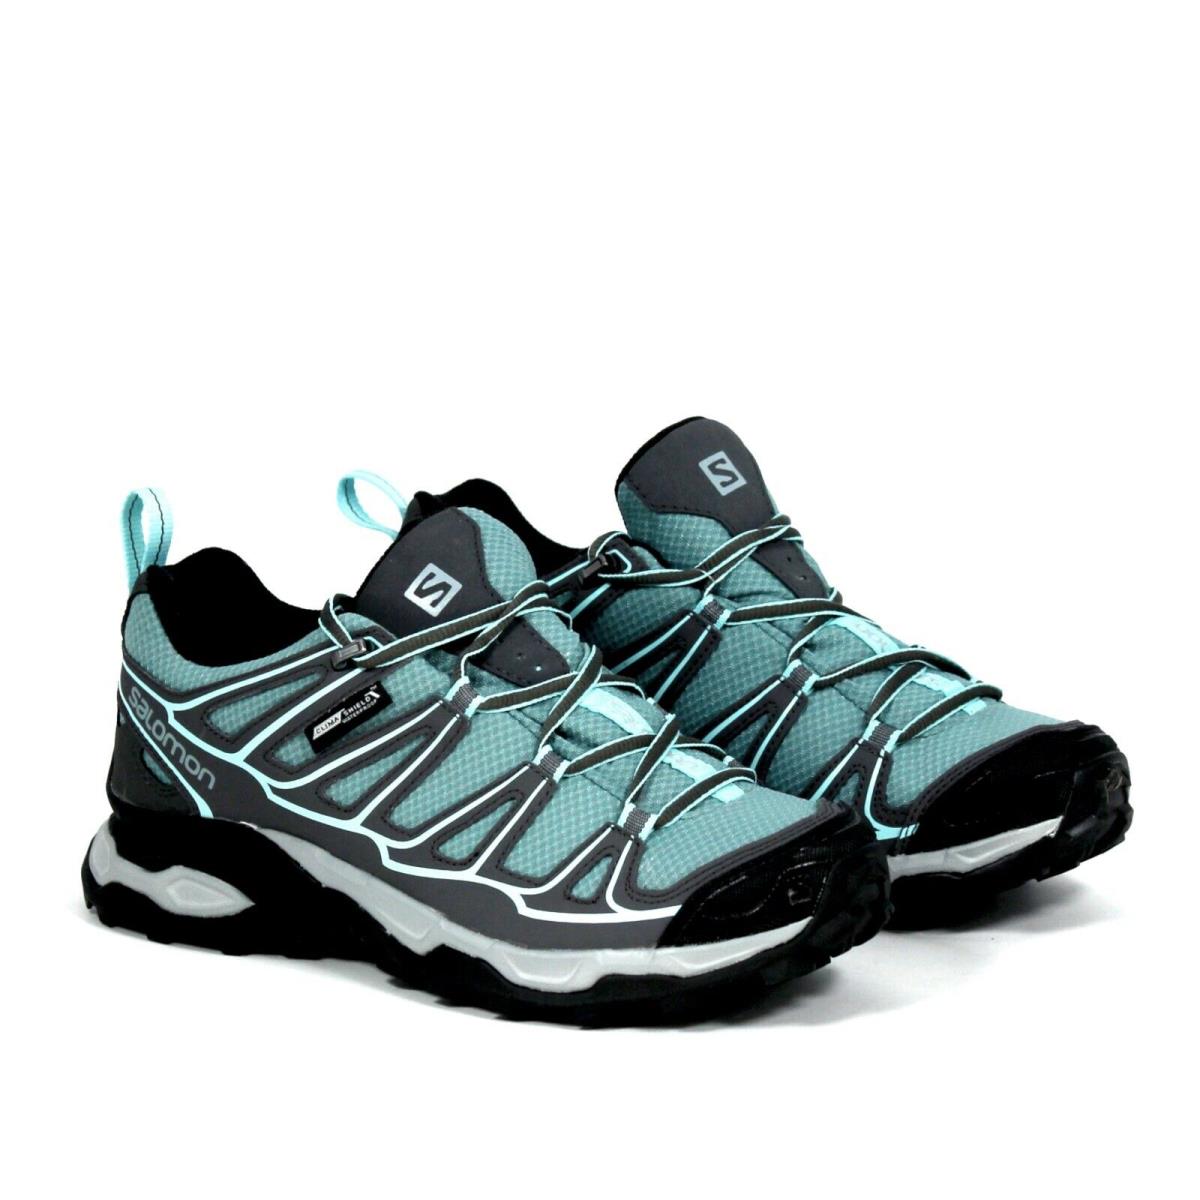 Salomon Womens X Ultra Prime CS WP Aruba Blue Grey Hiking Shoes Size 5